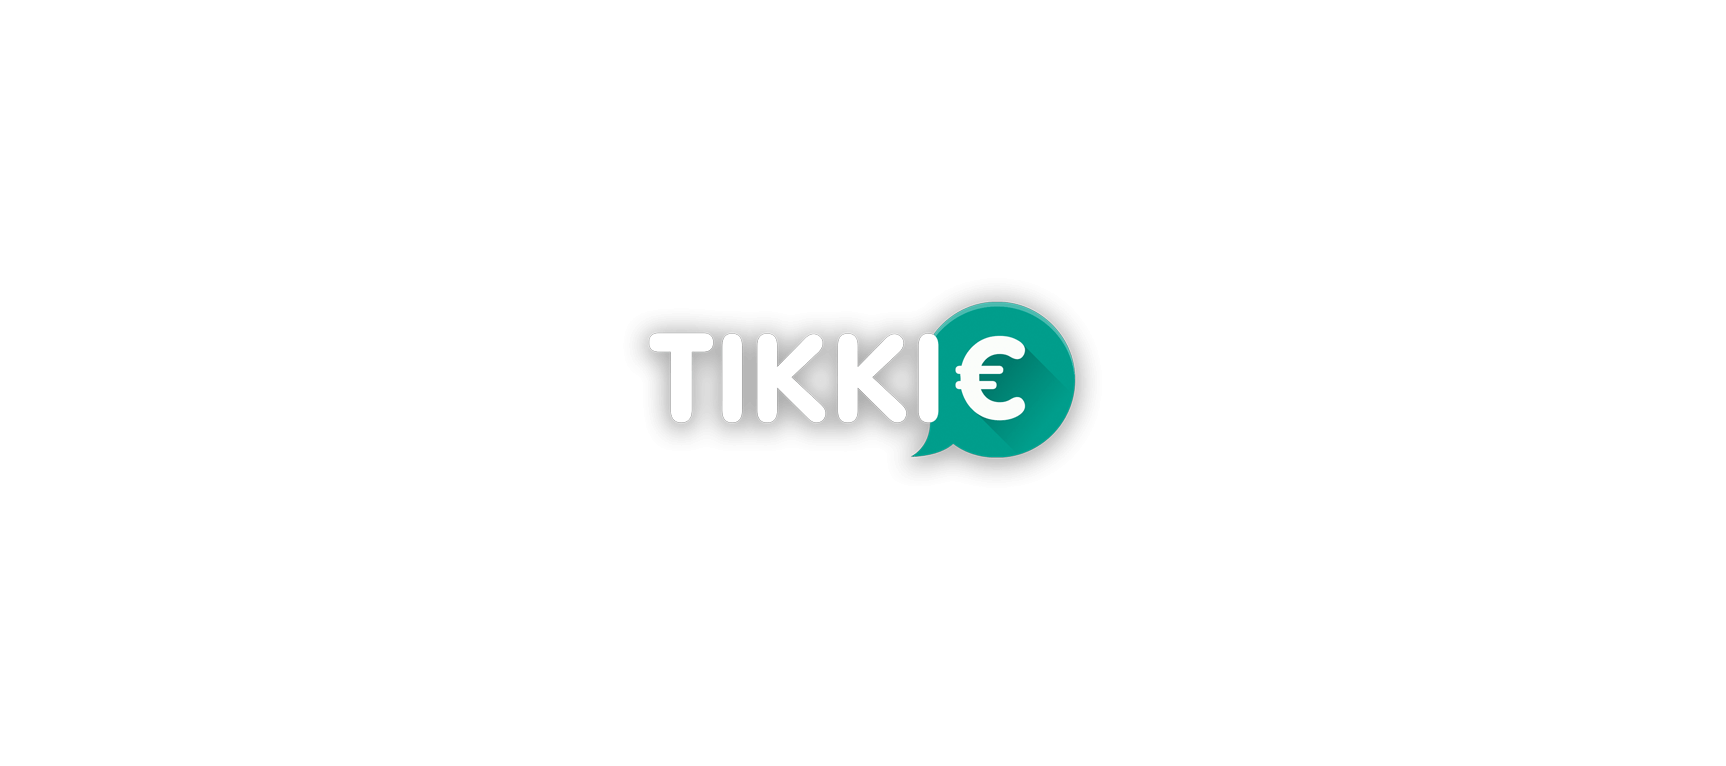 Tikkie_logo